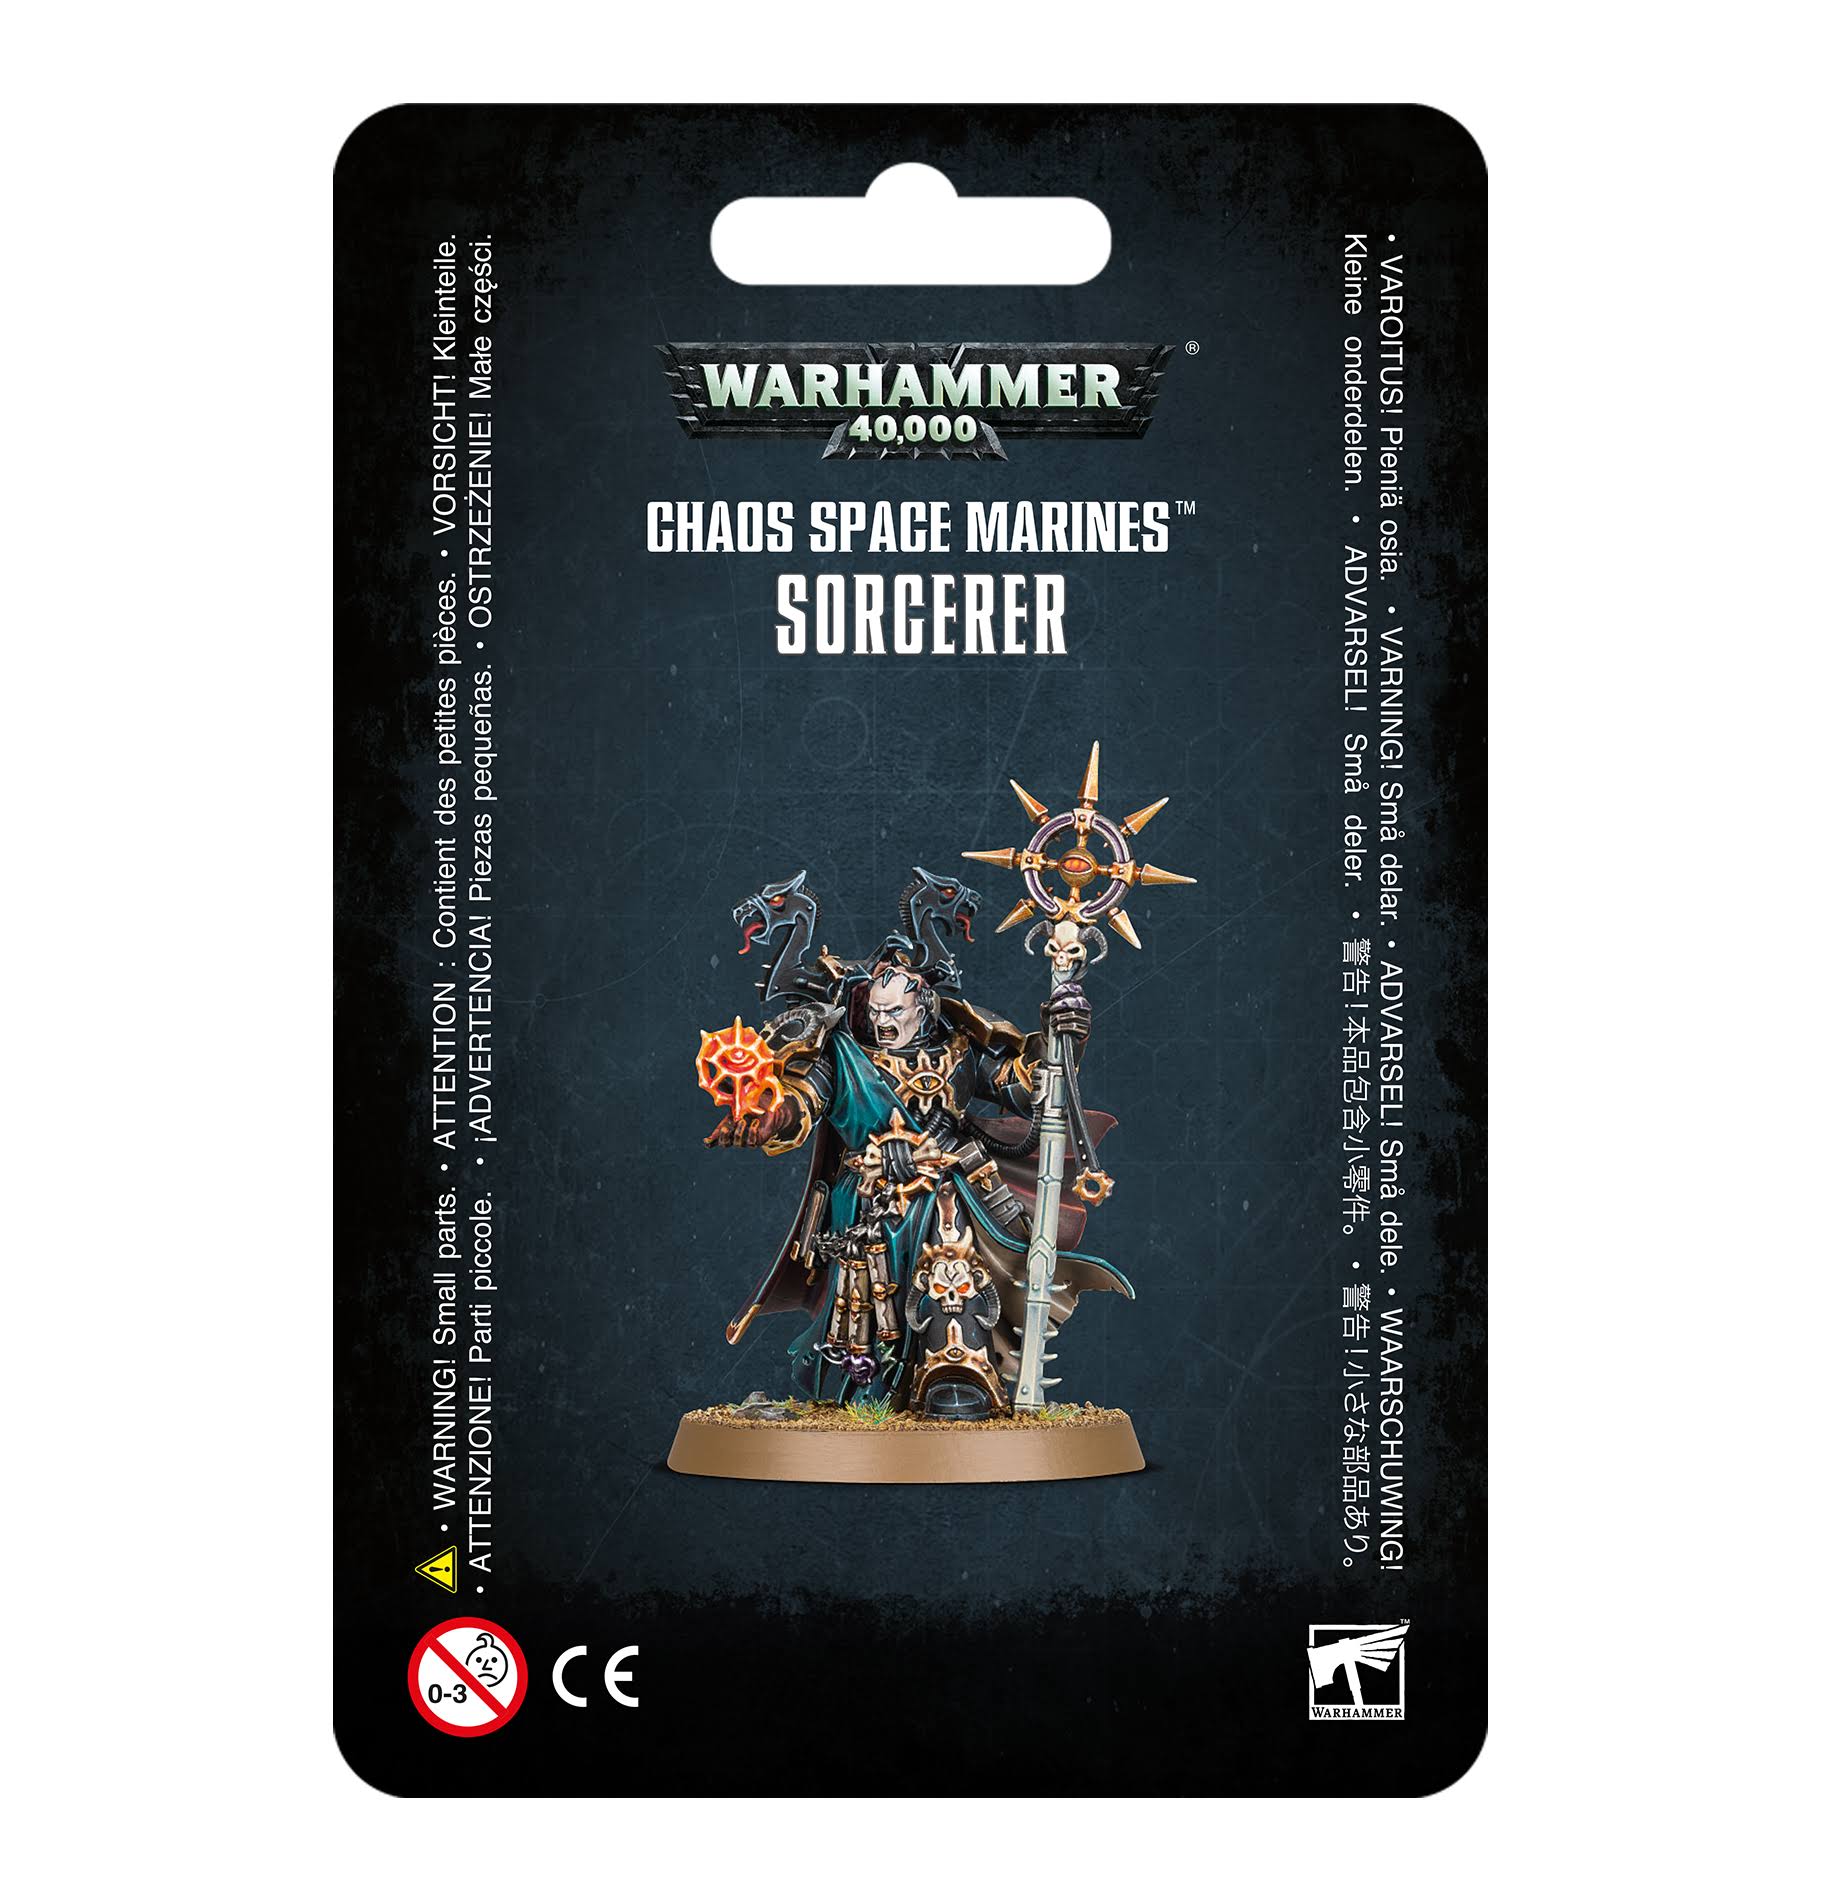 Warhammer 40k Chaos Space Marines Miniature - Sorcerer